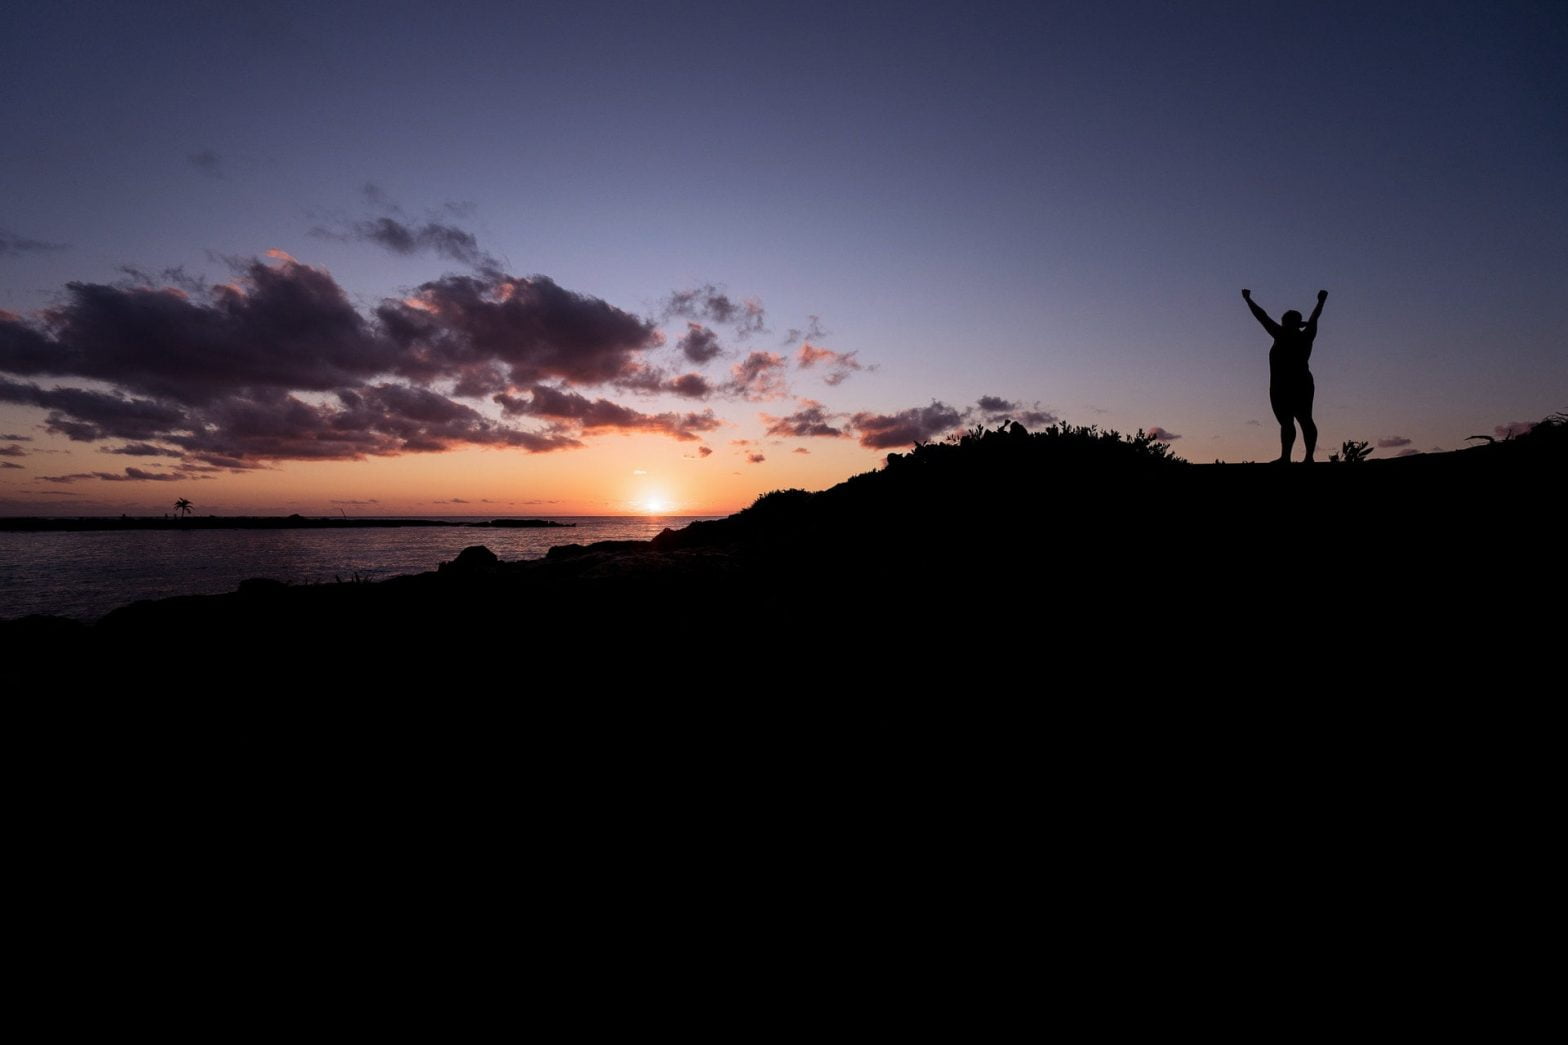 09~10月統一發票 1000+200 萬獎落淡水 light landscape sunset person winning mountain sea